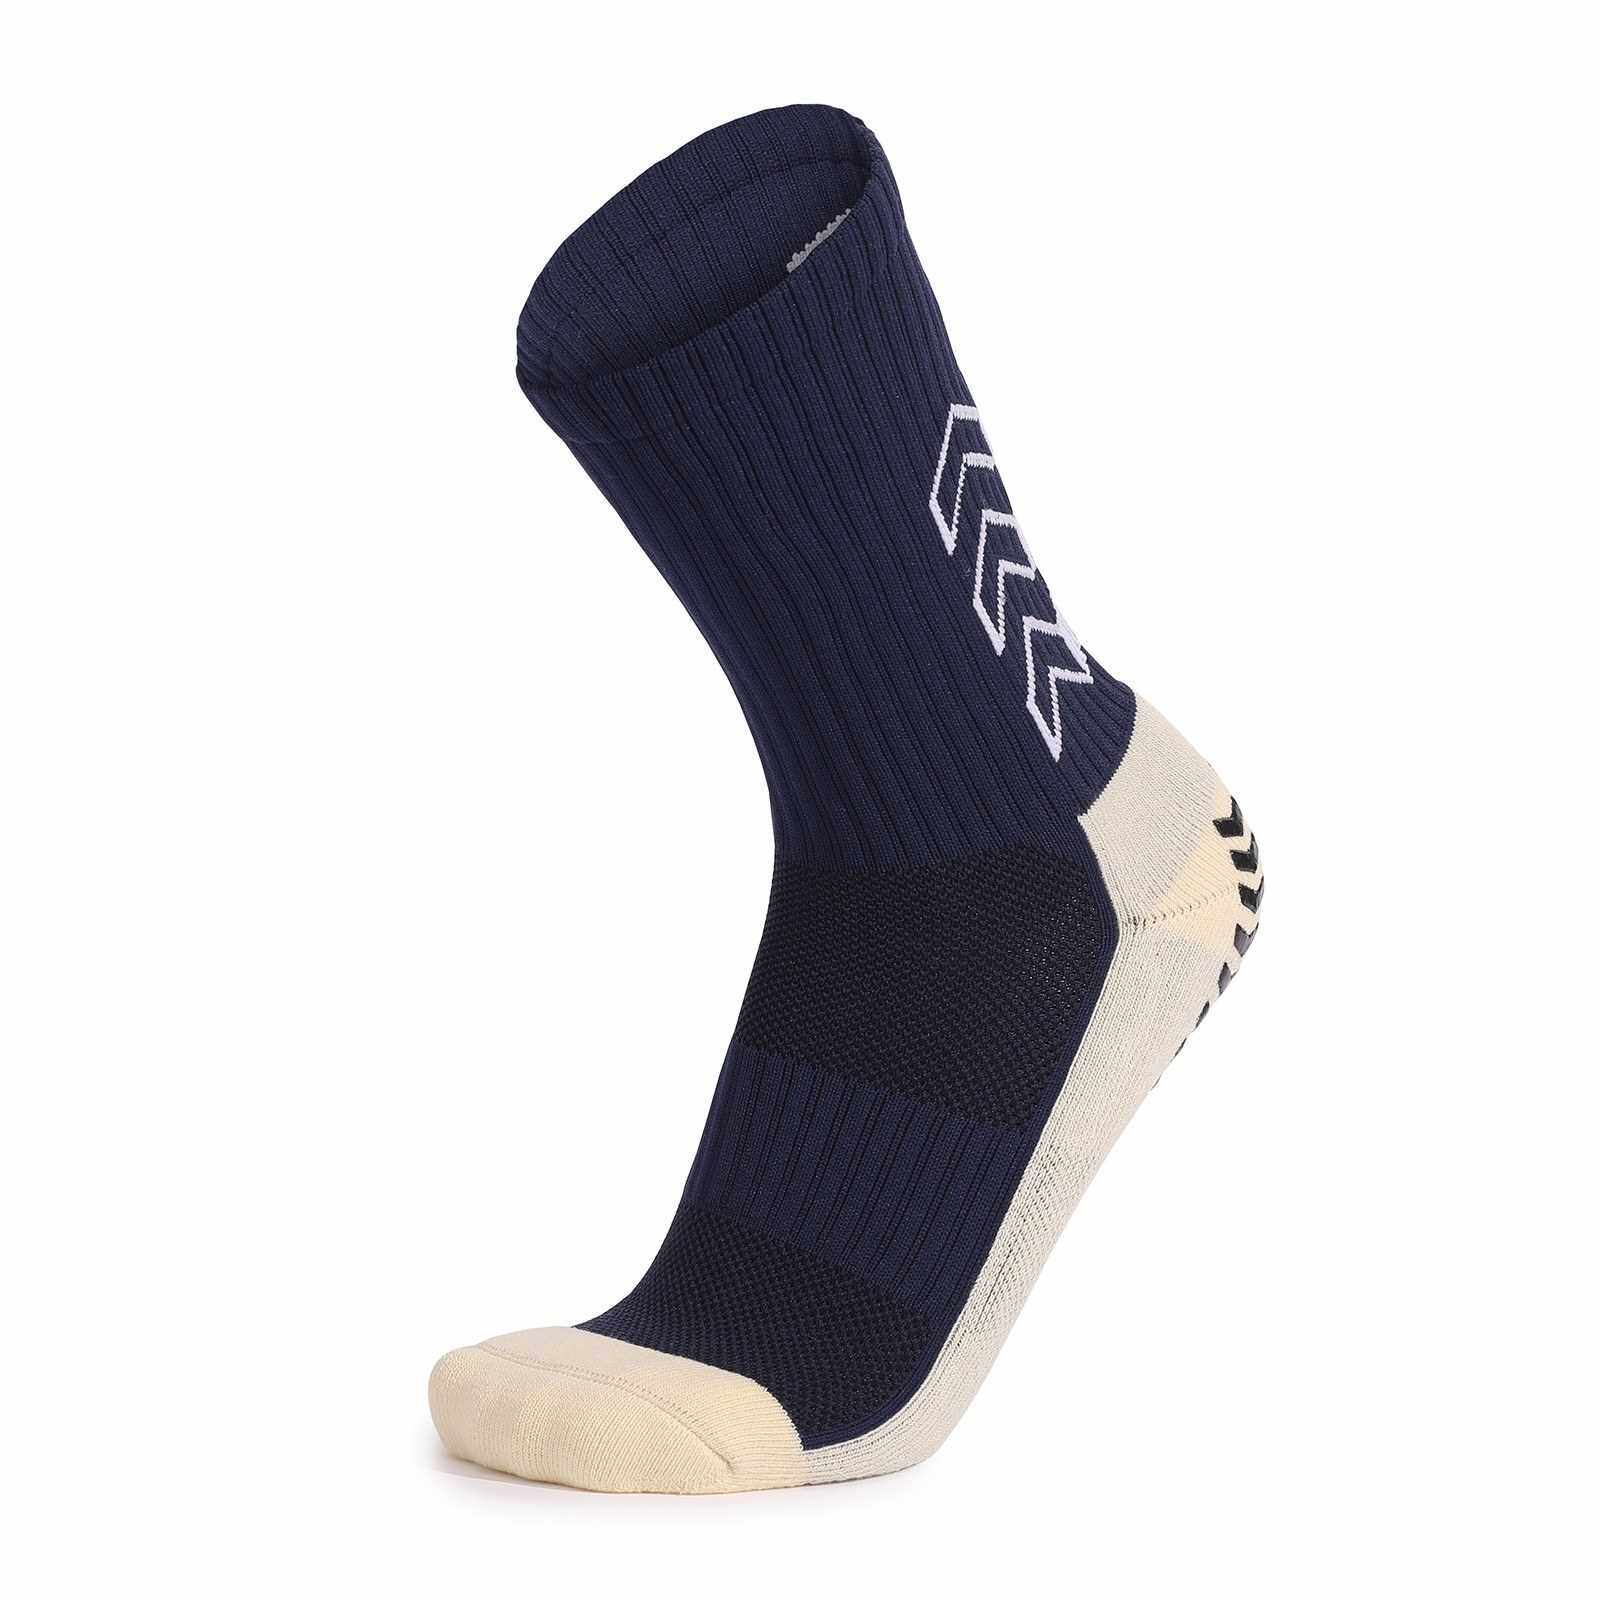 Sport Cushioned Socks Non Slip Grip for Basketball Soccer Ski Cycling Athletic Socks (Dark Blue)